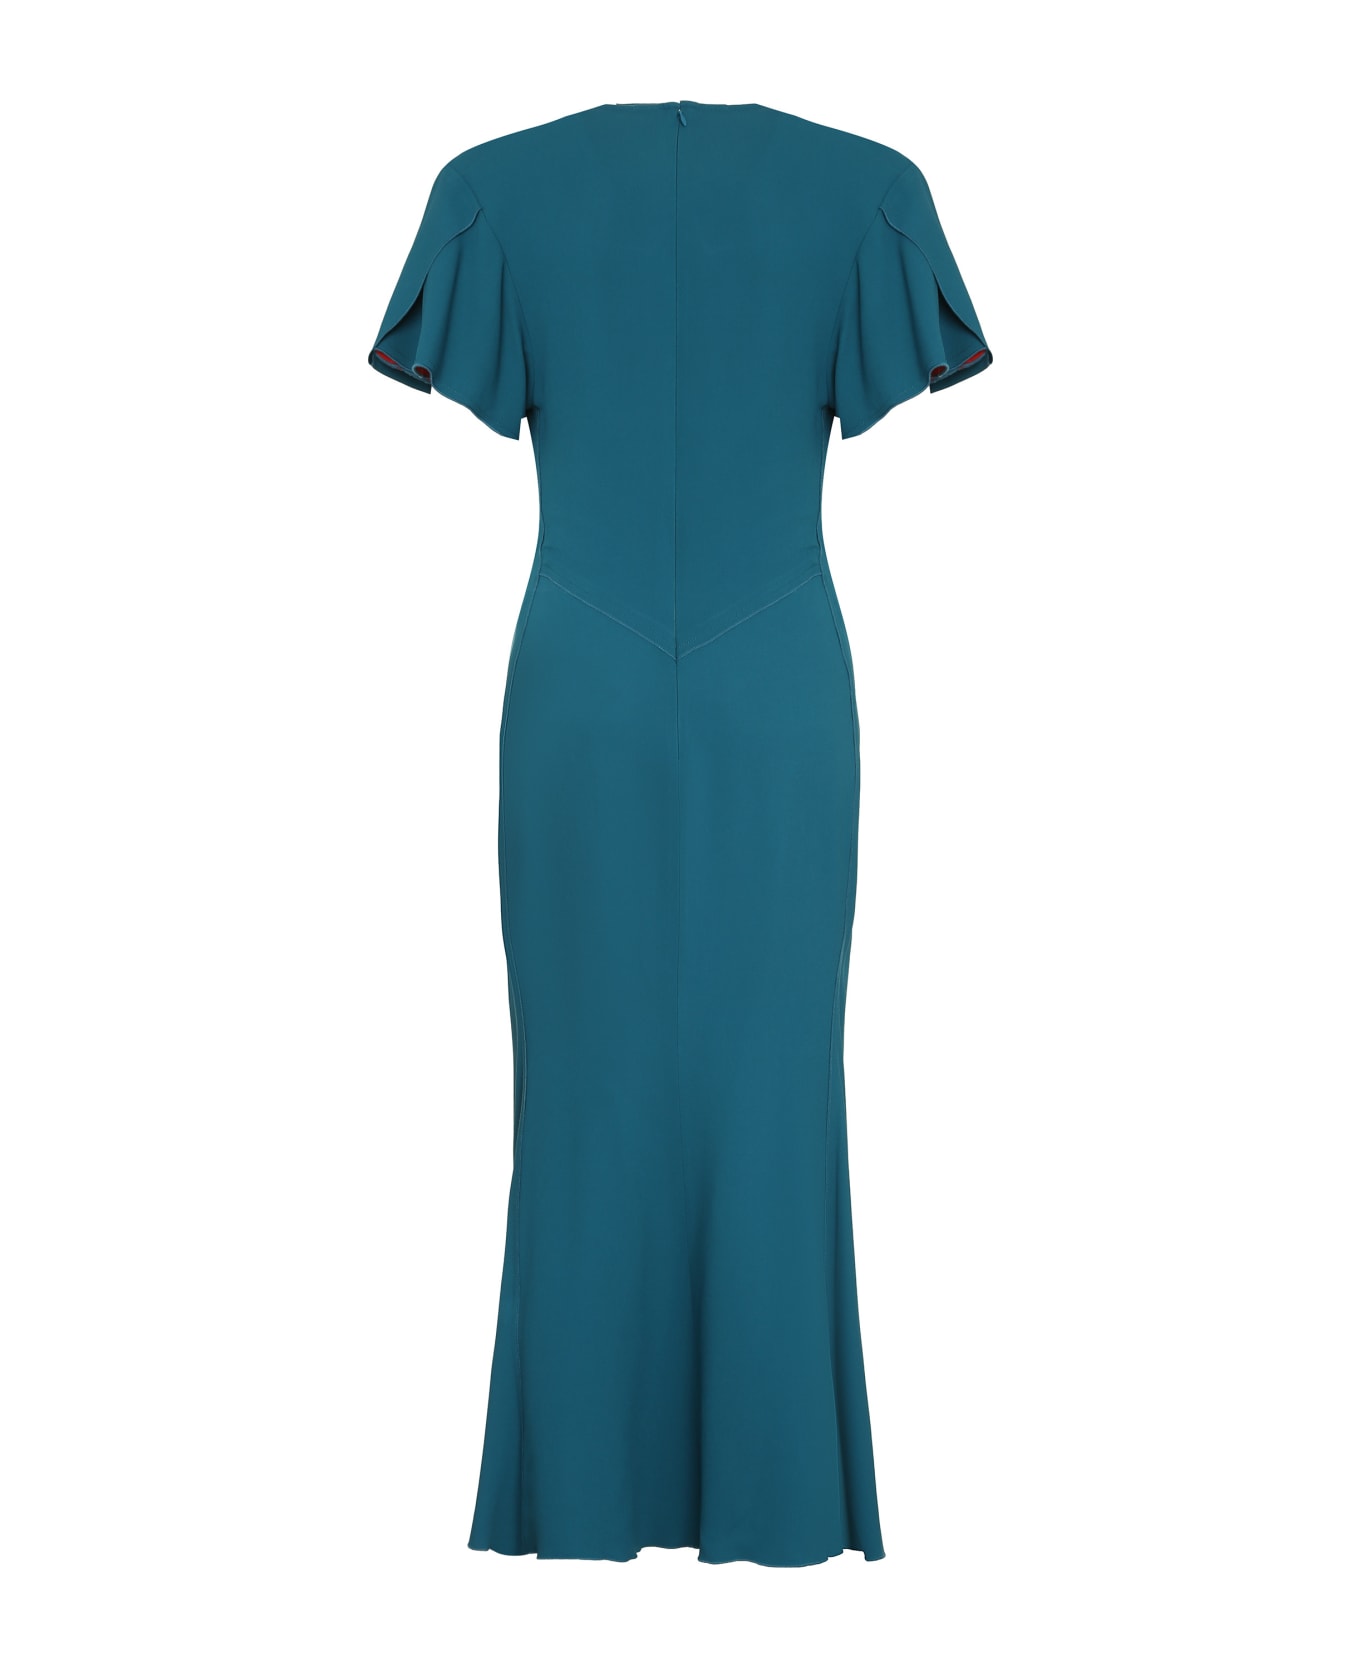 Victoria Beckham Stretch Viscose Dress - turquoise